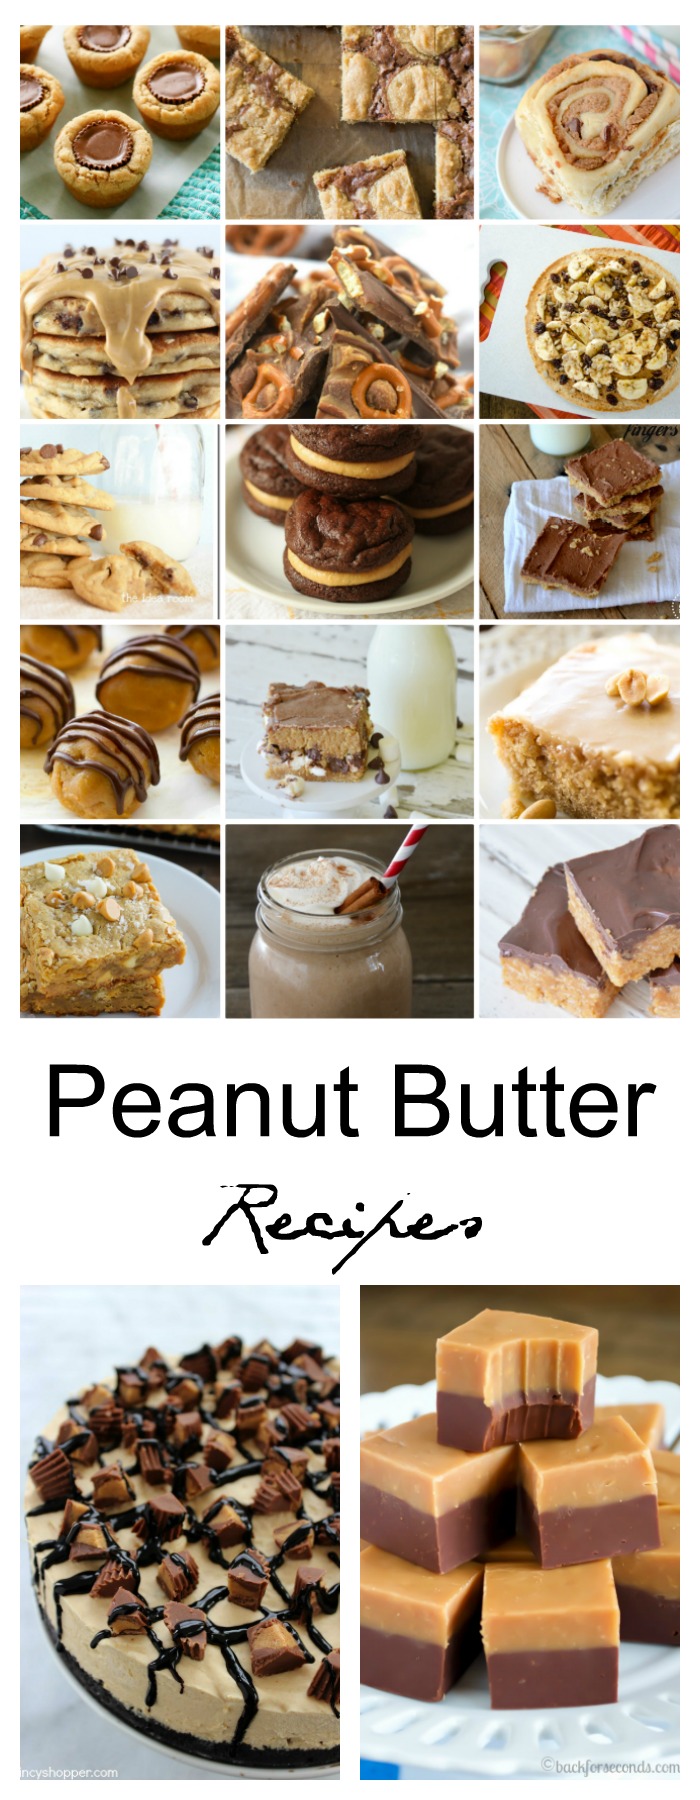 Peanut-Butter-Recipes-Pin